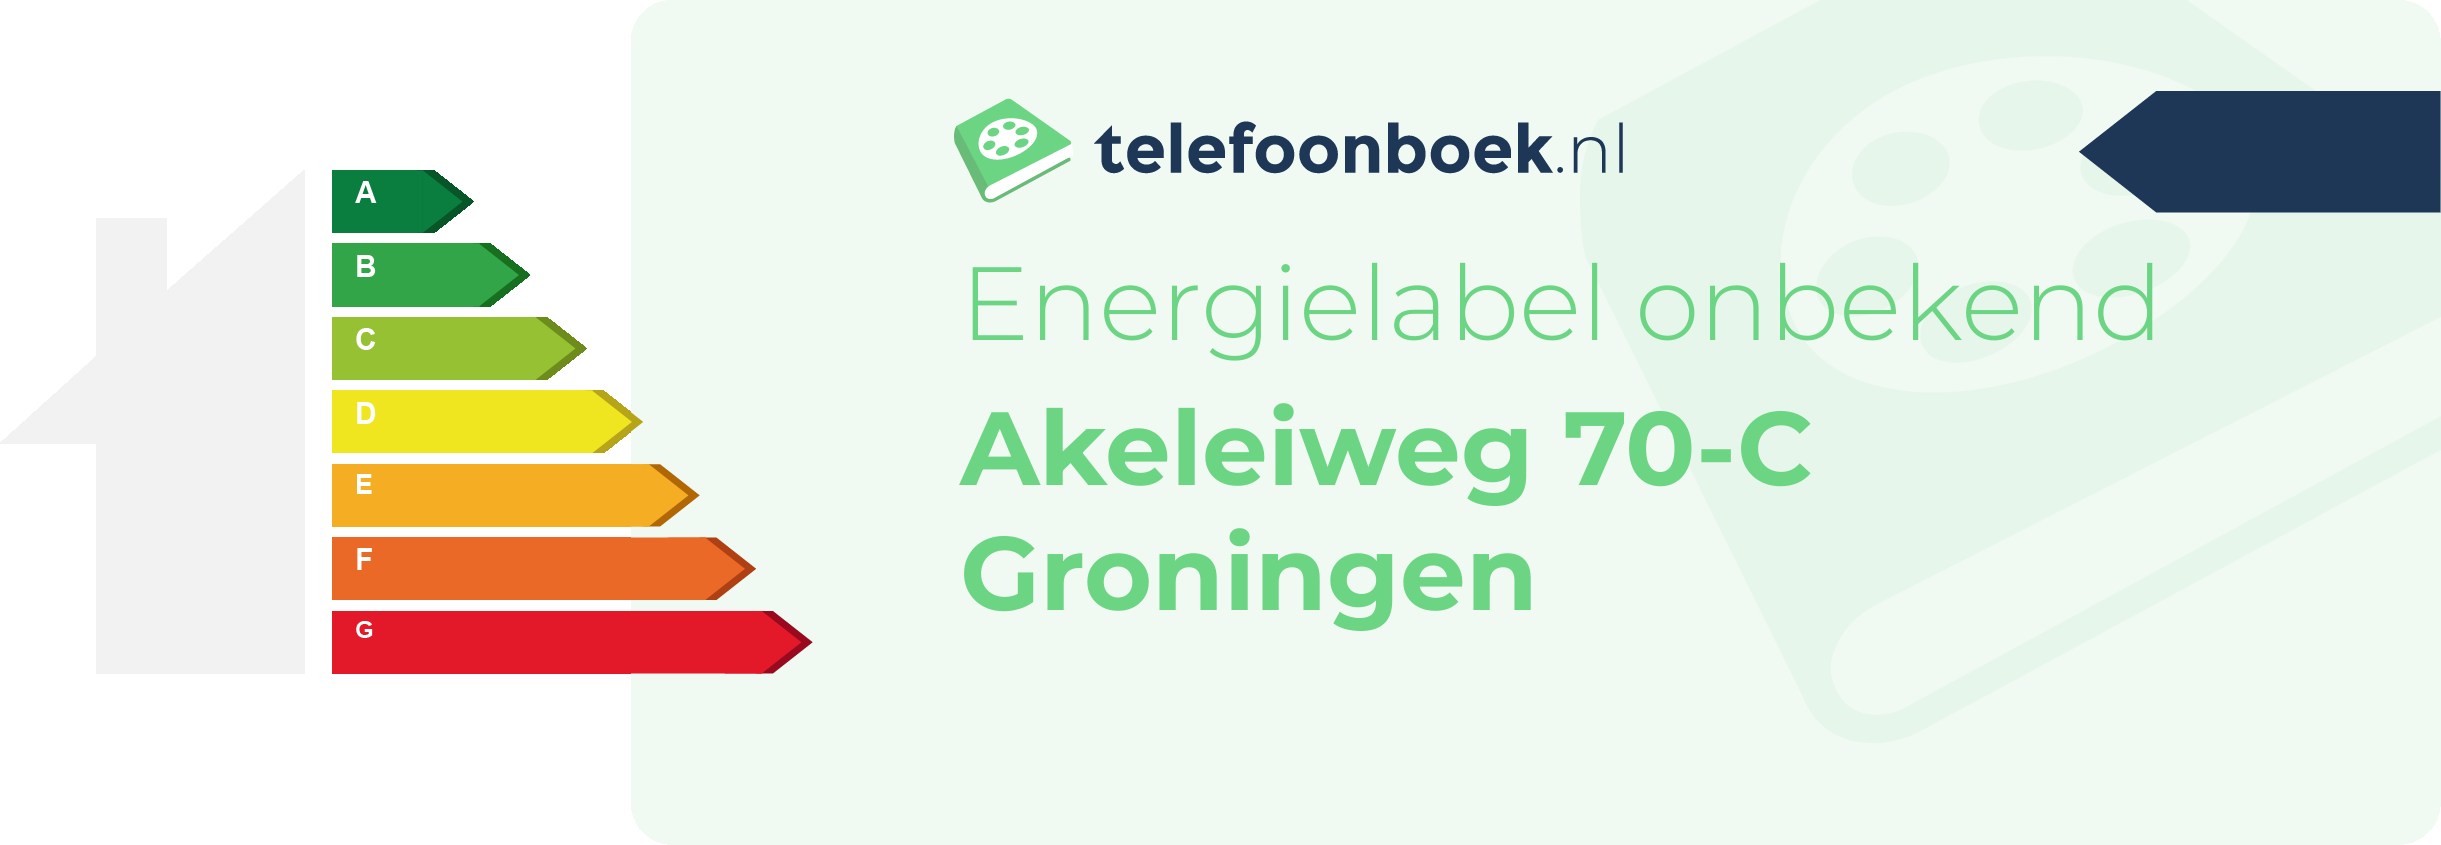 Energielabel Akeleiweg 70-C Groningen